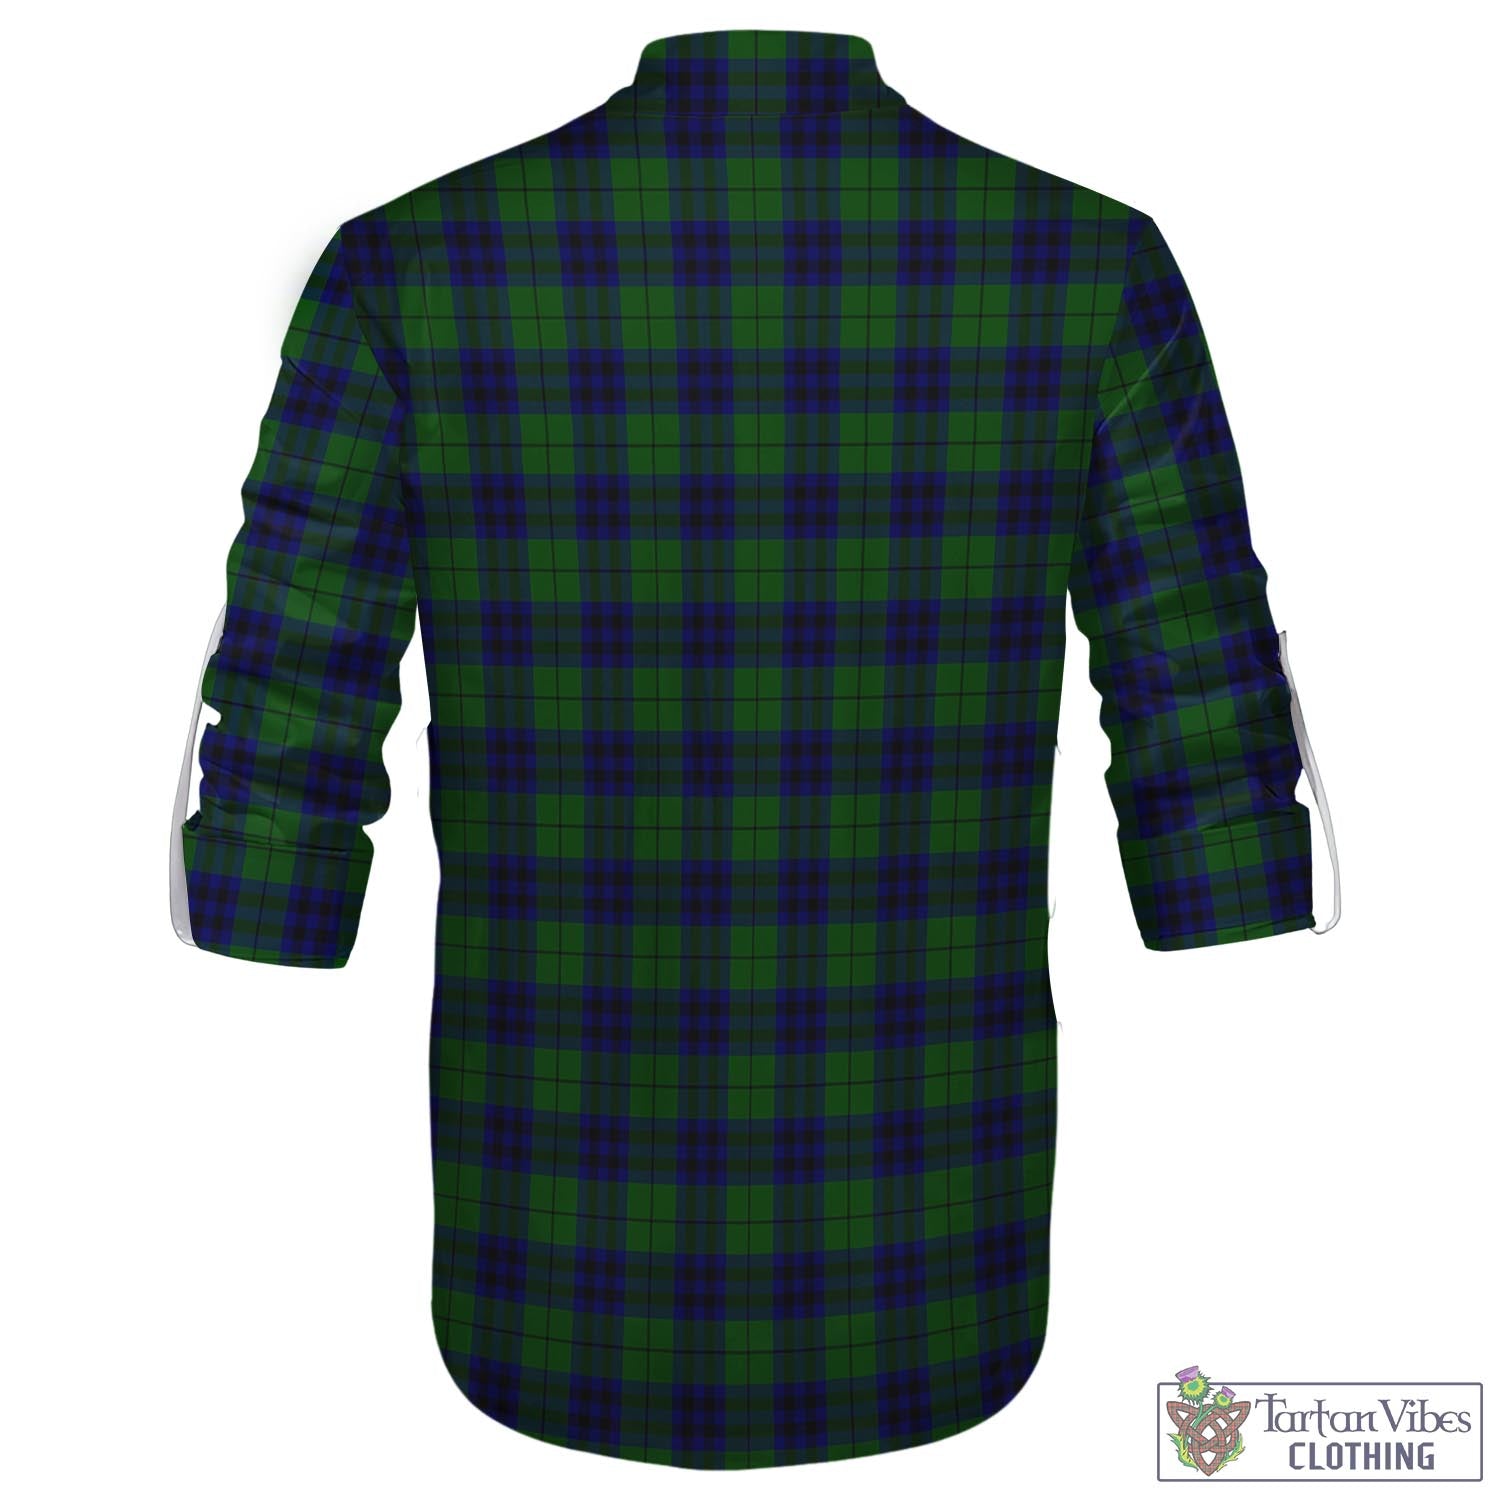 Tartan Vibes Clothing Keith Modern Tartan Men's Scottish Traditional Jacobite Ghillie Kilt Shirt